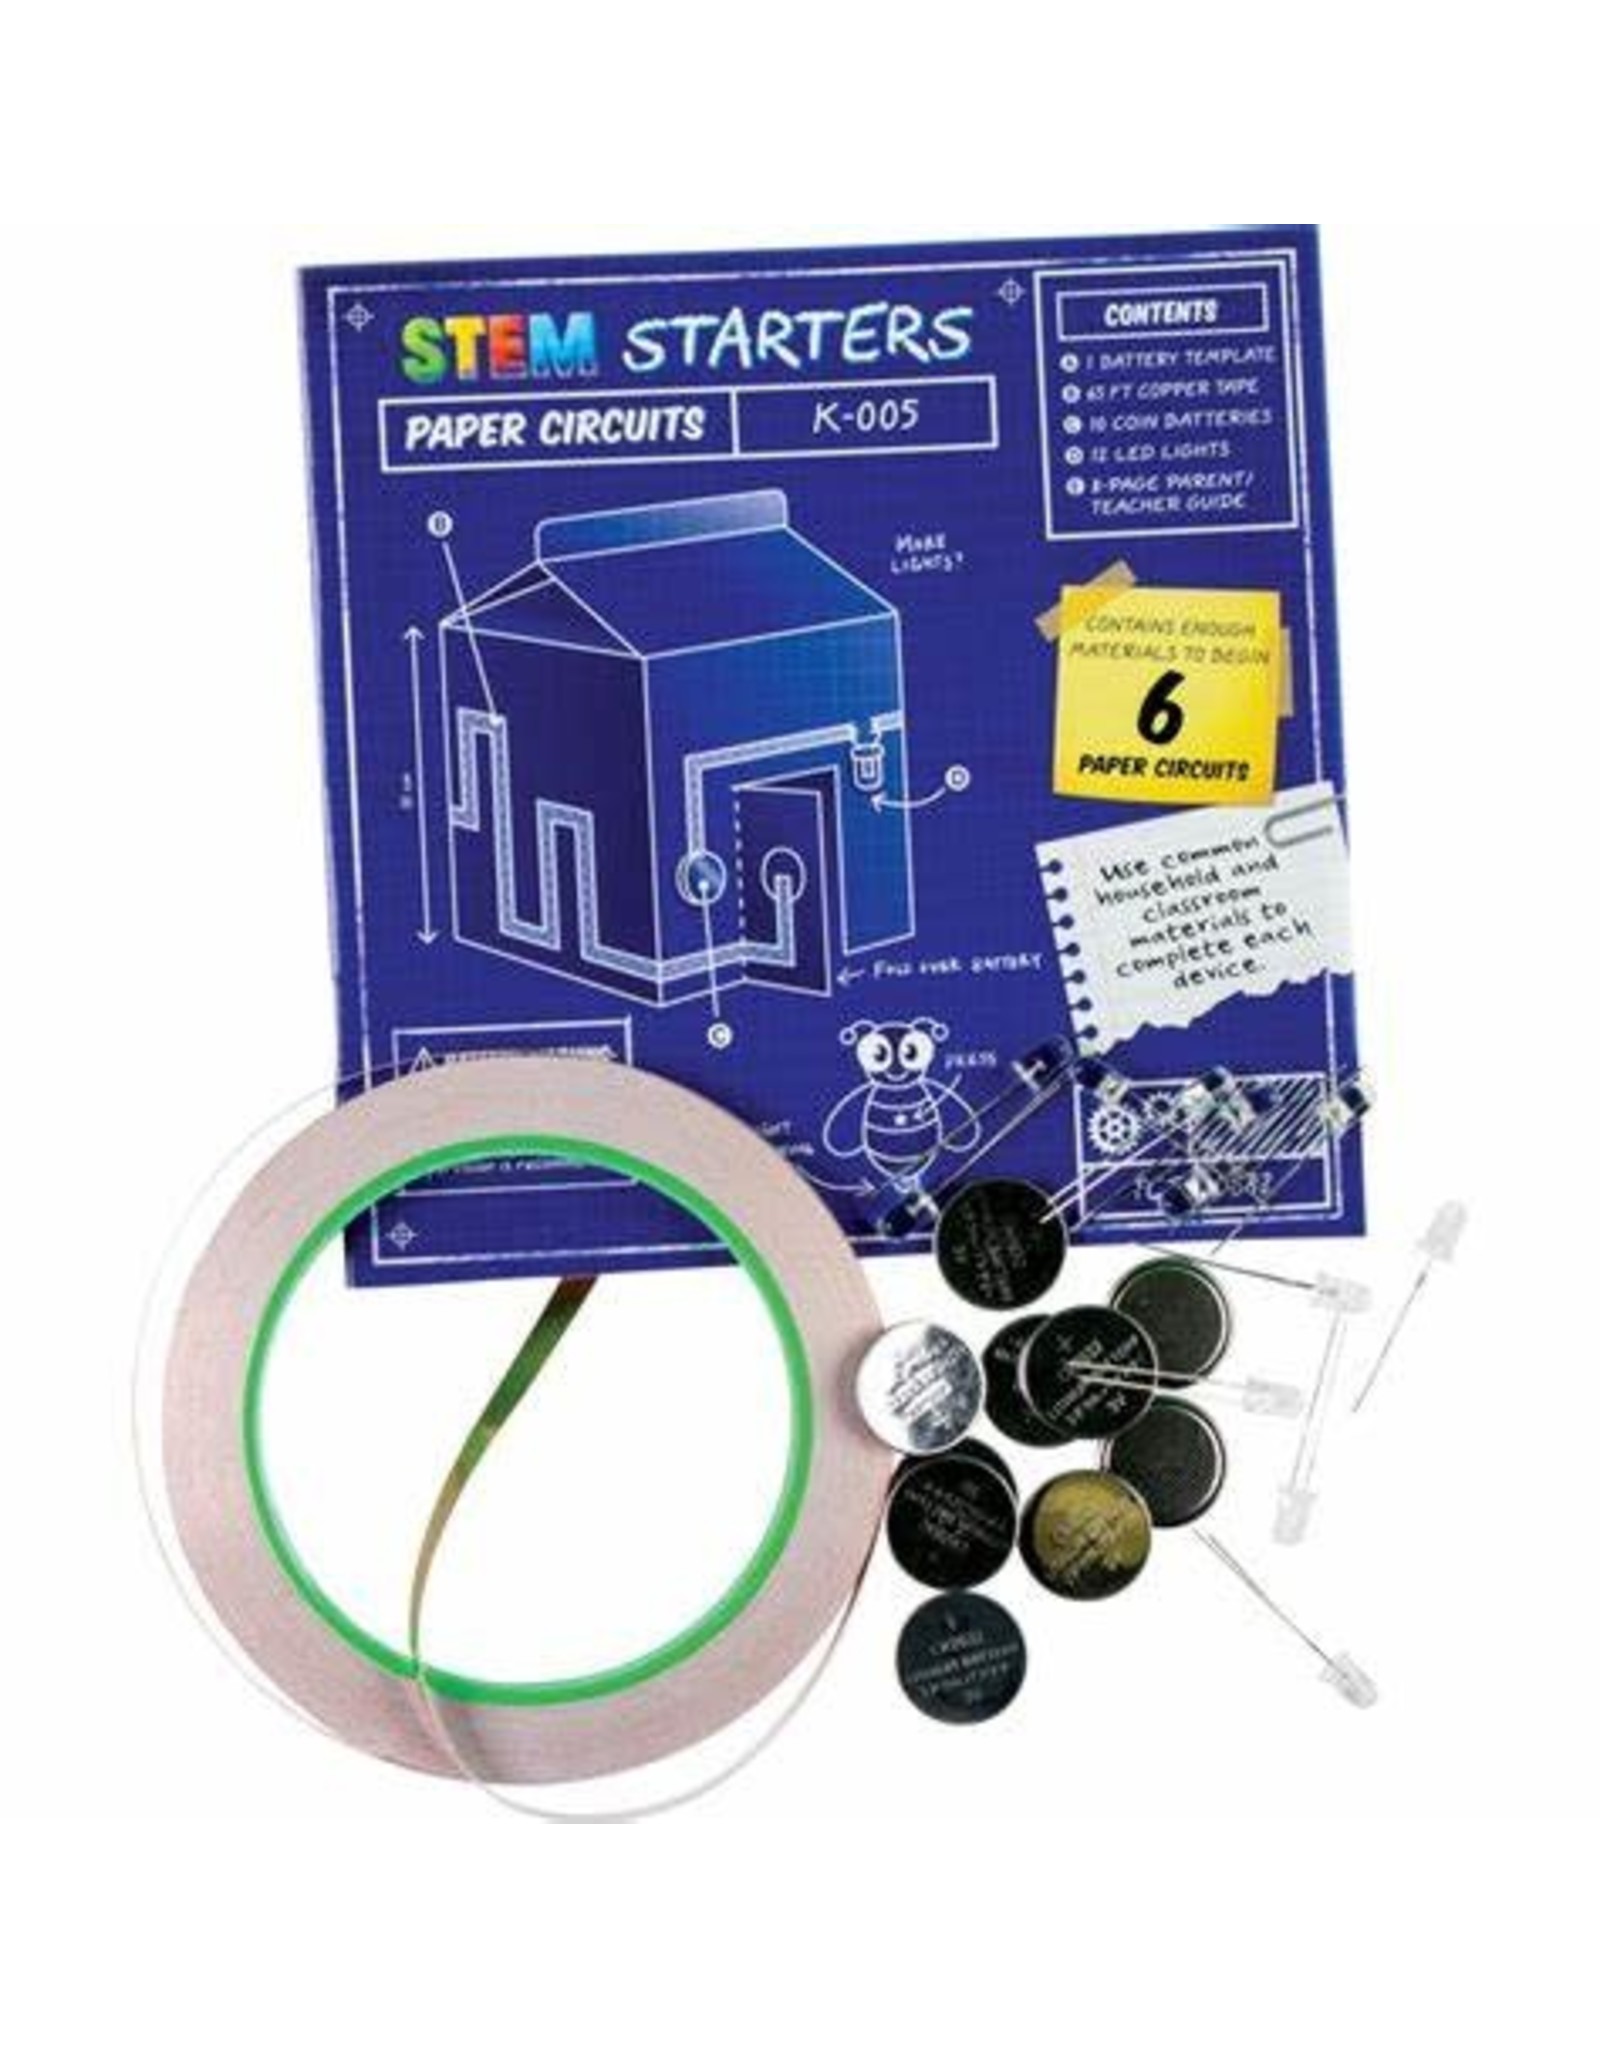 STEM starters: Paper Circuits